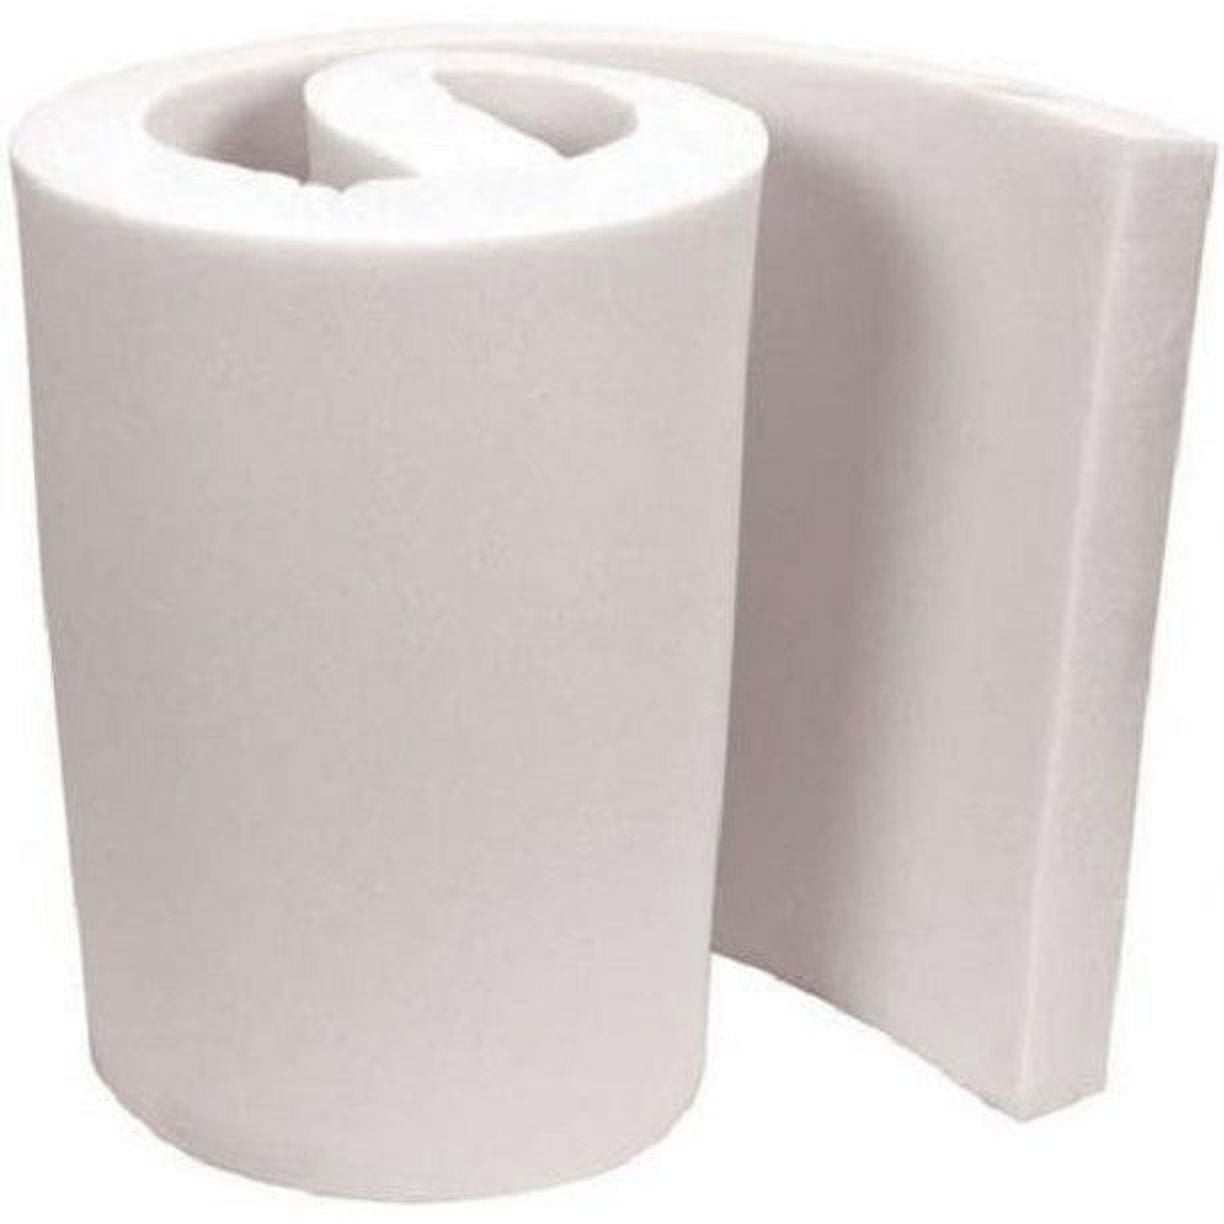 Custom High Density Upholstery Foam Cushion Sofa Seat Padding Replacement  Sheet,Durable Memory Foam Sheet Craft Foam Cut to Any Size